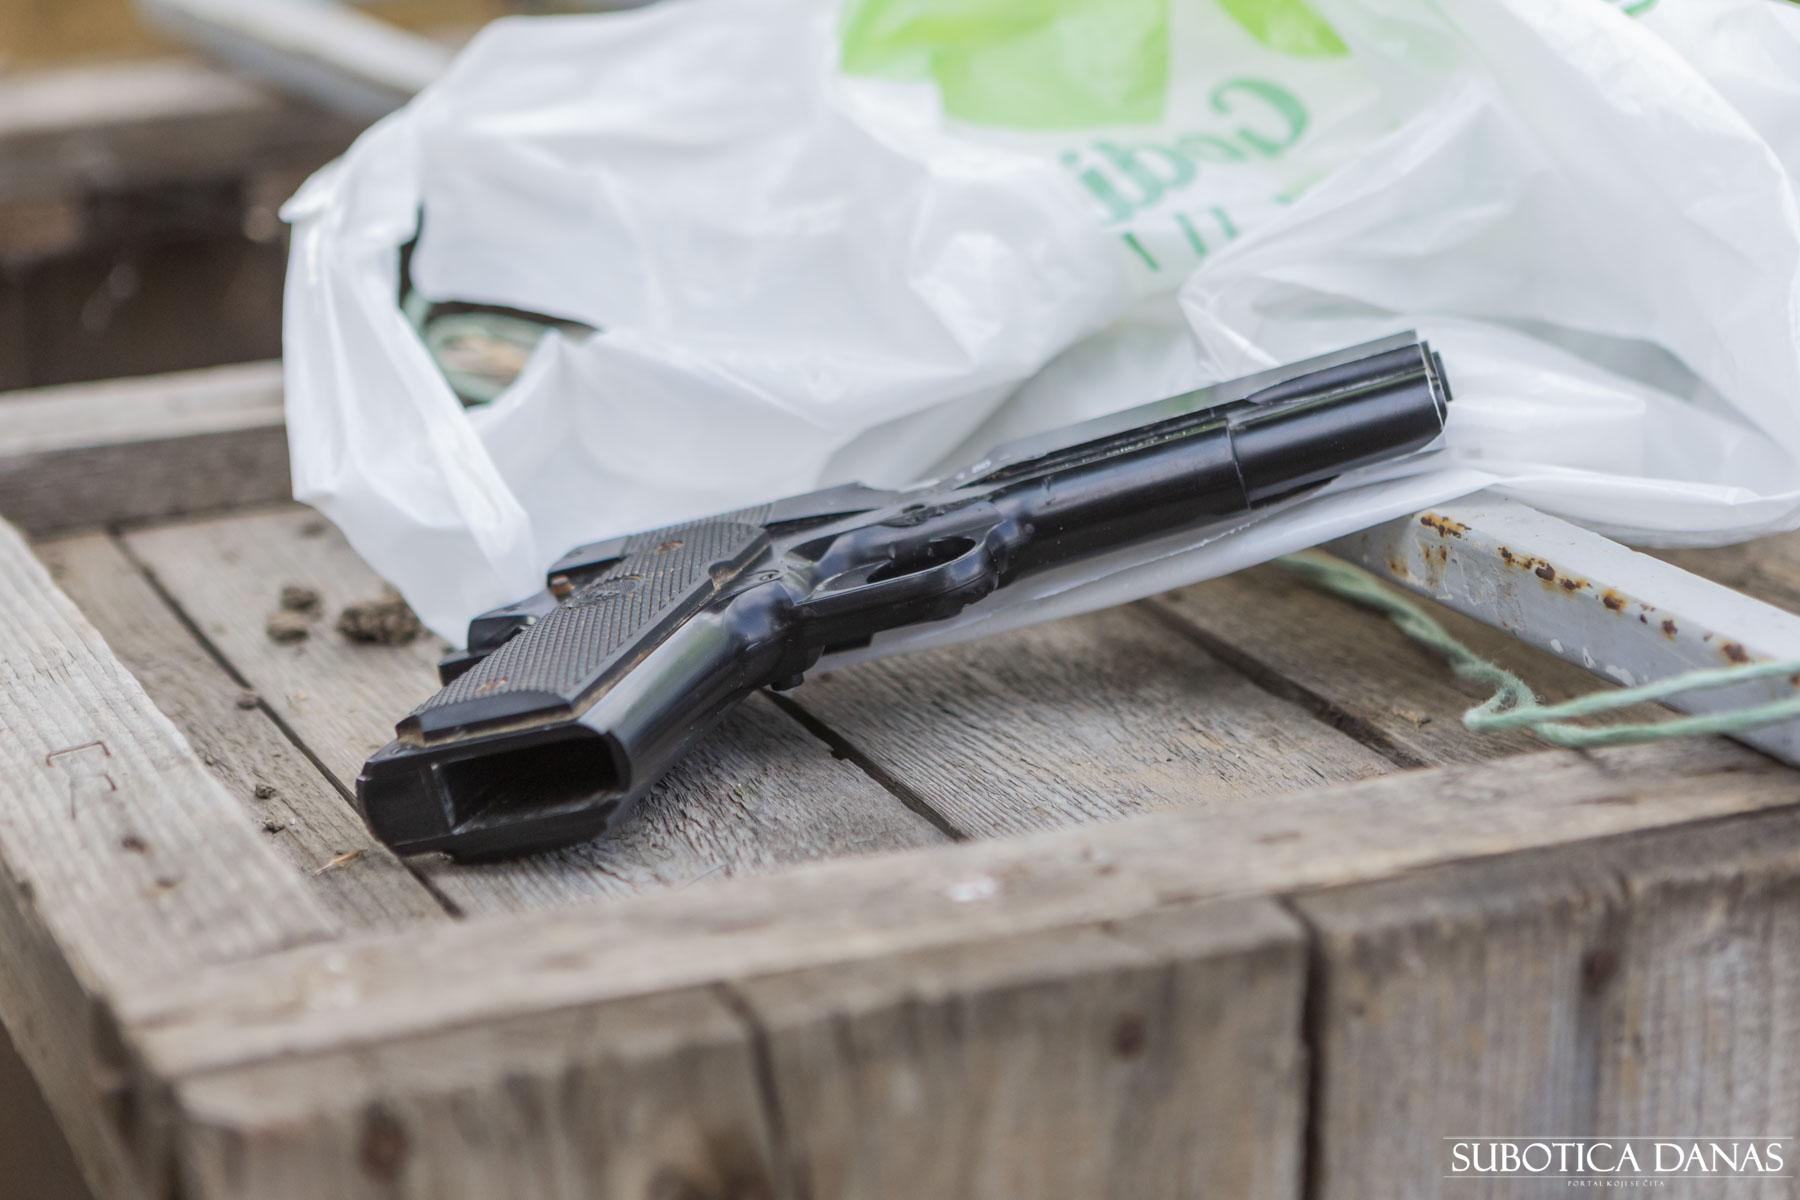 Pronađen pištolj u blizini Prihvatnog centra